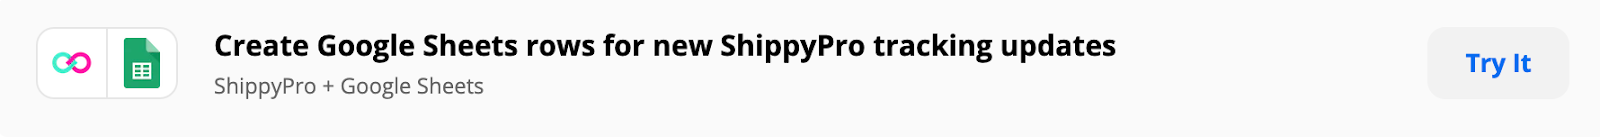 ShippyPro + Google Sheets